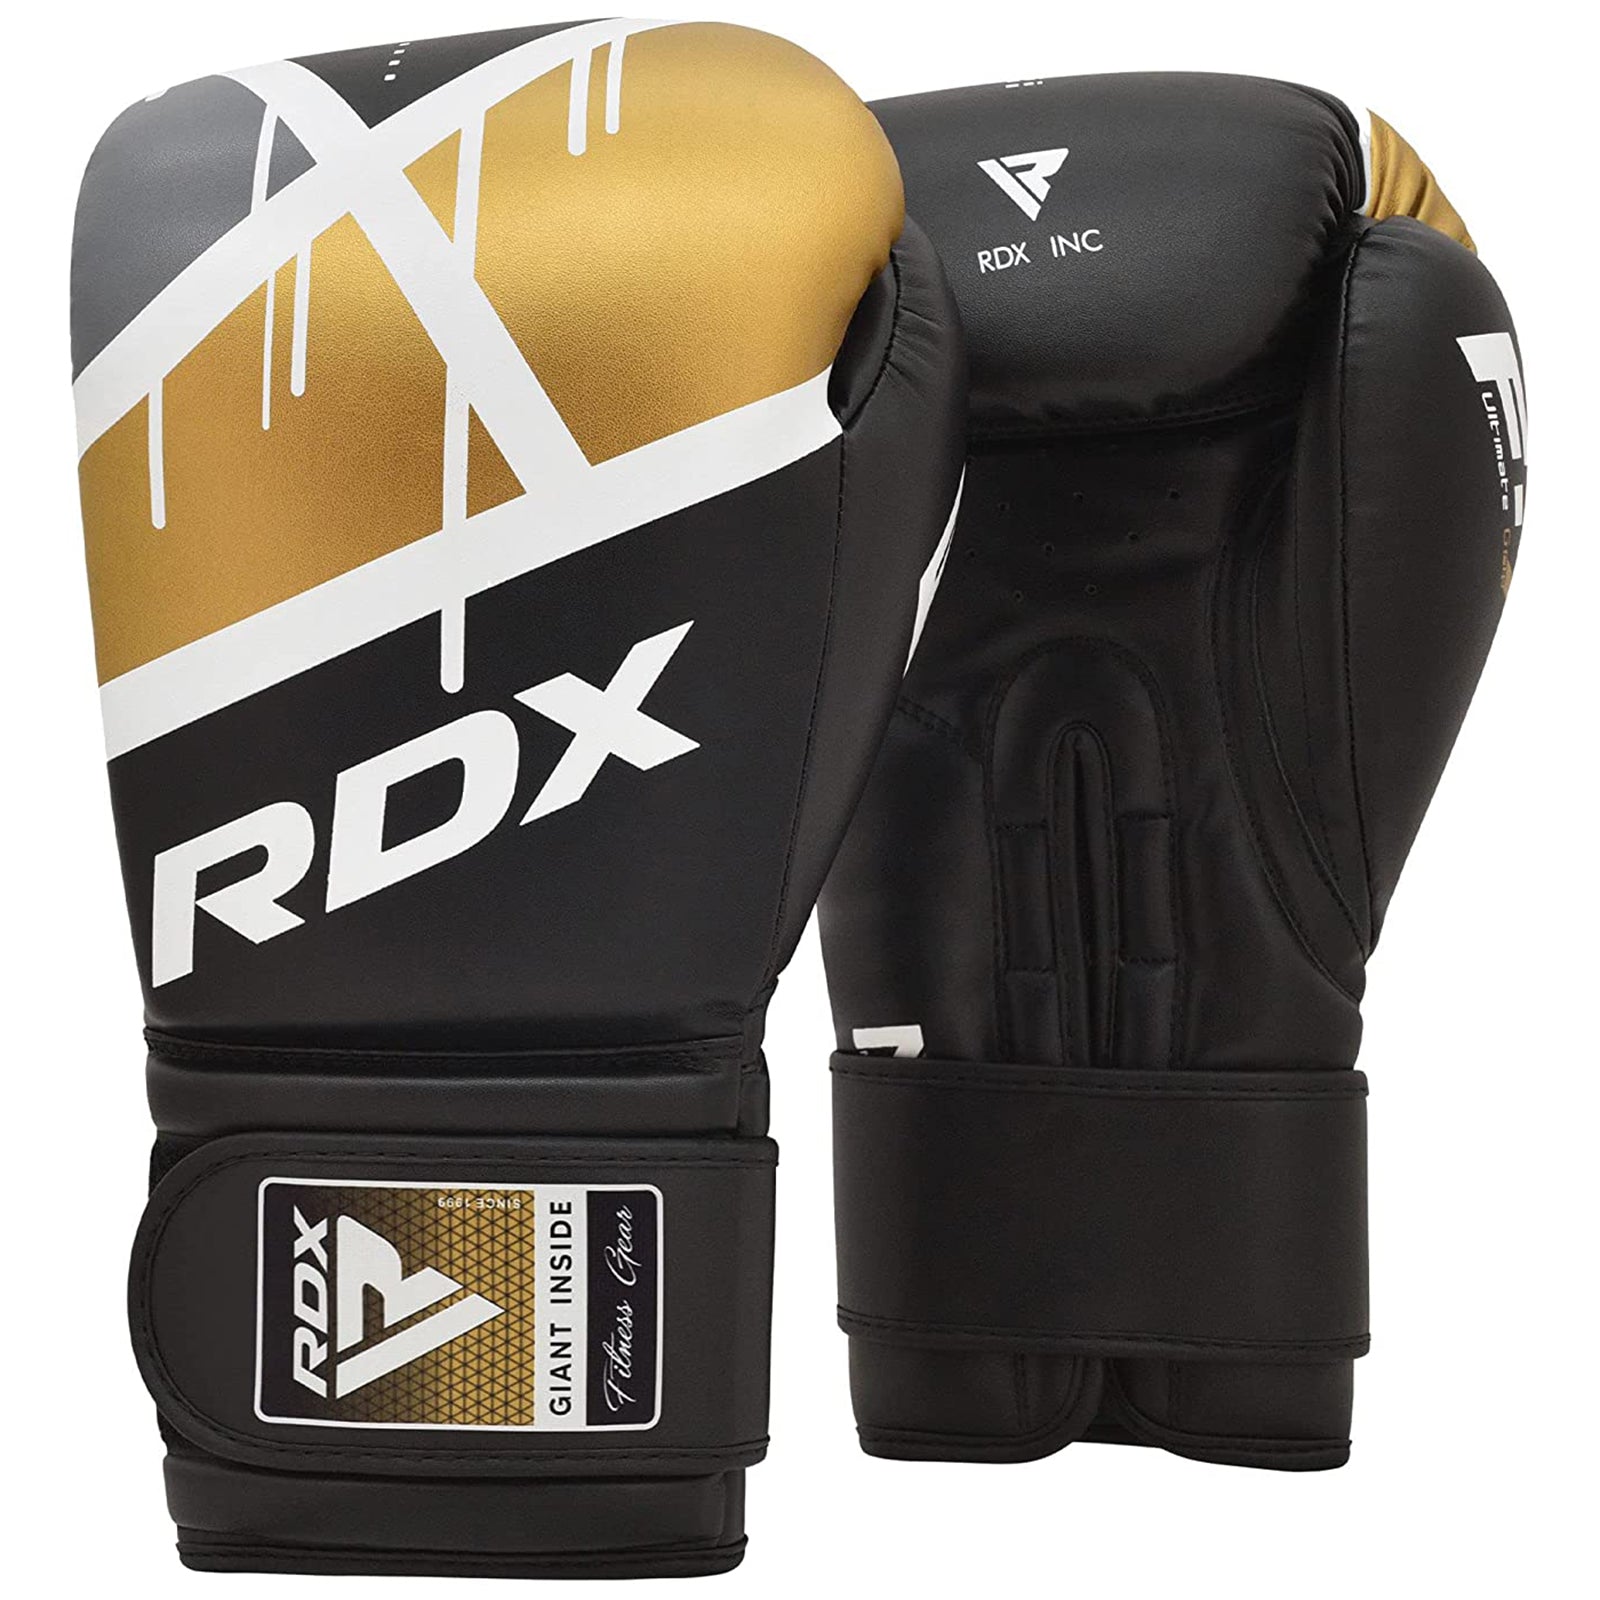 RDX F7 EGO MMA, BJJ, Muay Thai, Kickboxing, Training Boxing Gloves - BLACK GOLDEN - 8oz - Pro-Distributing